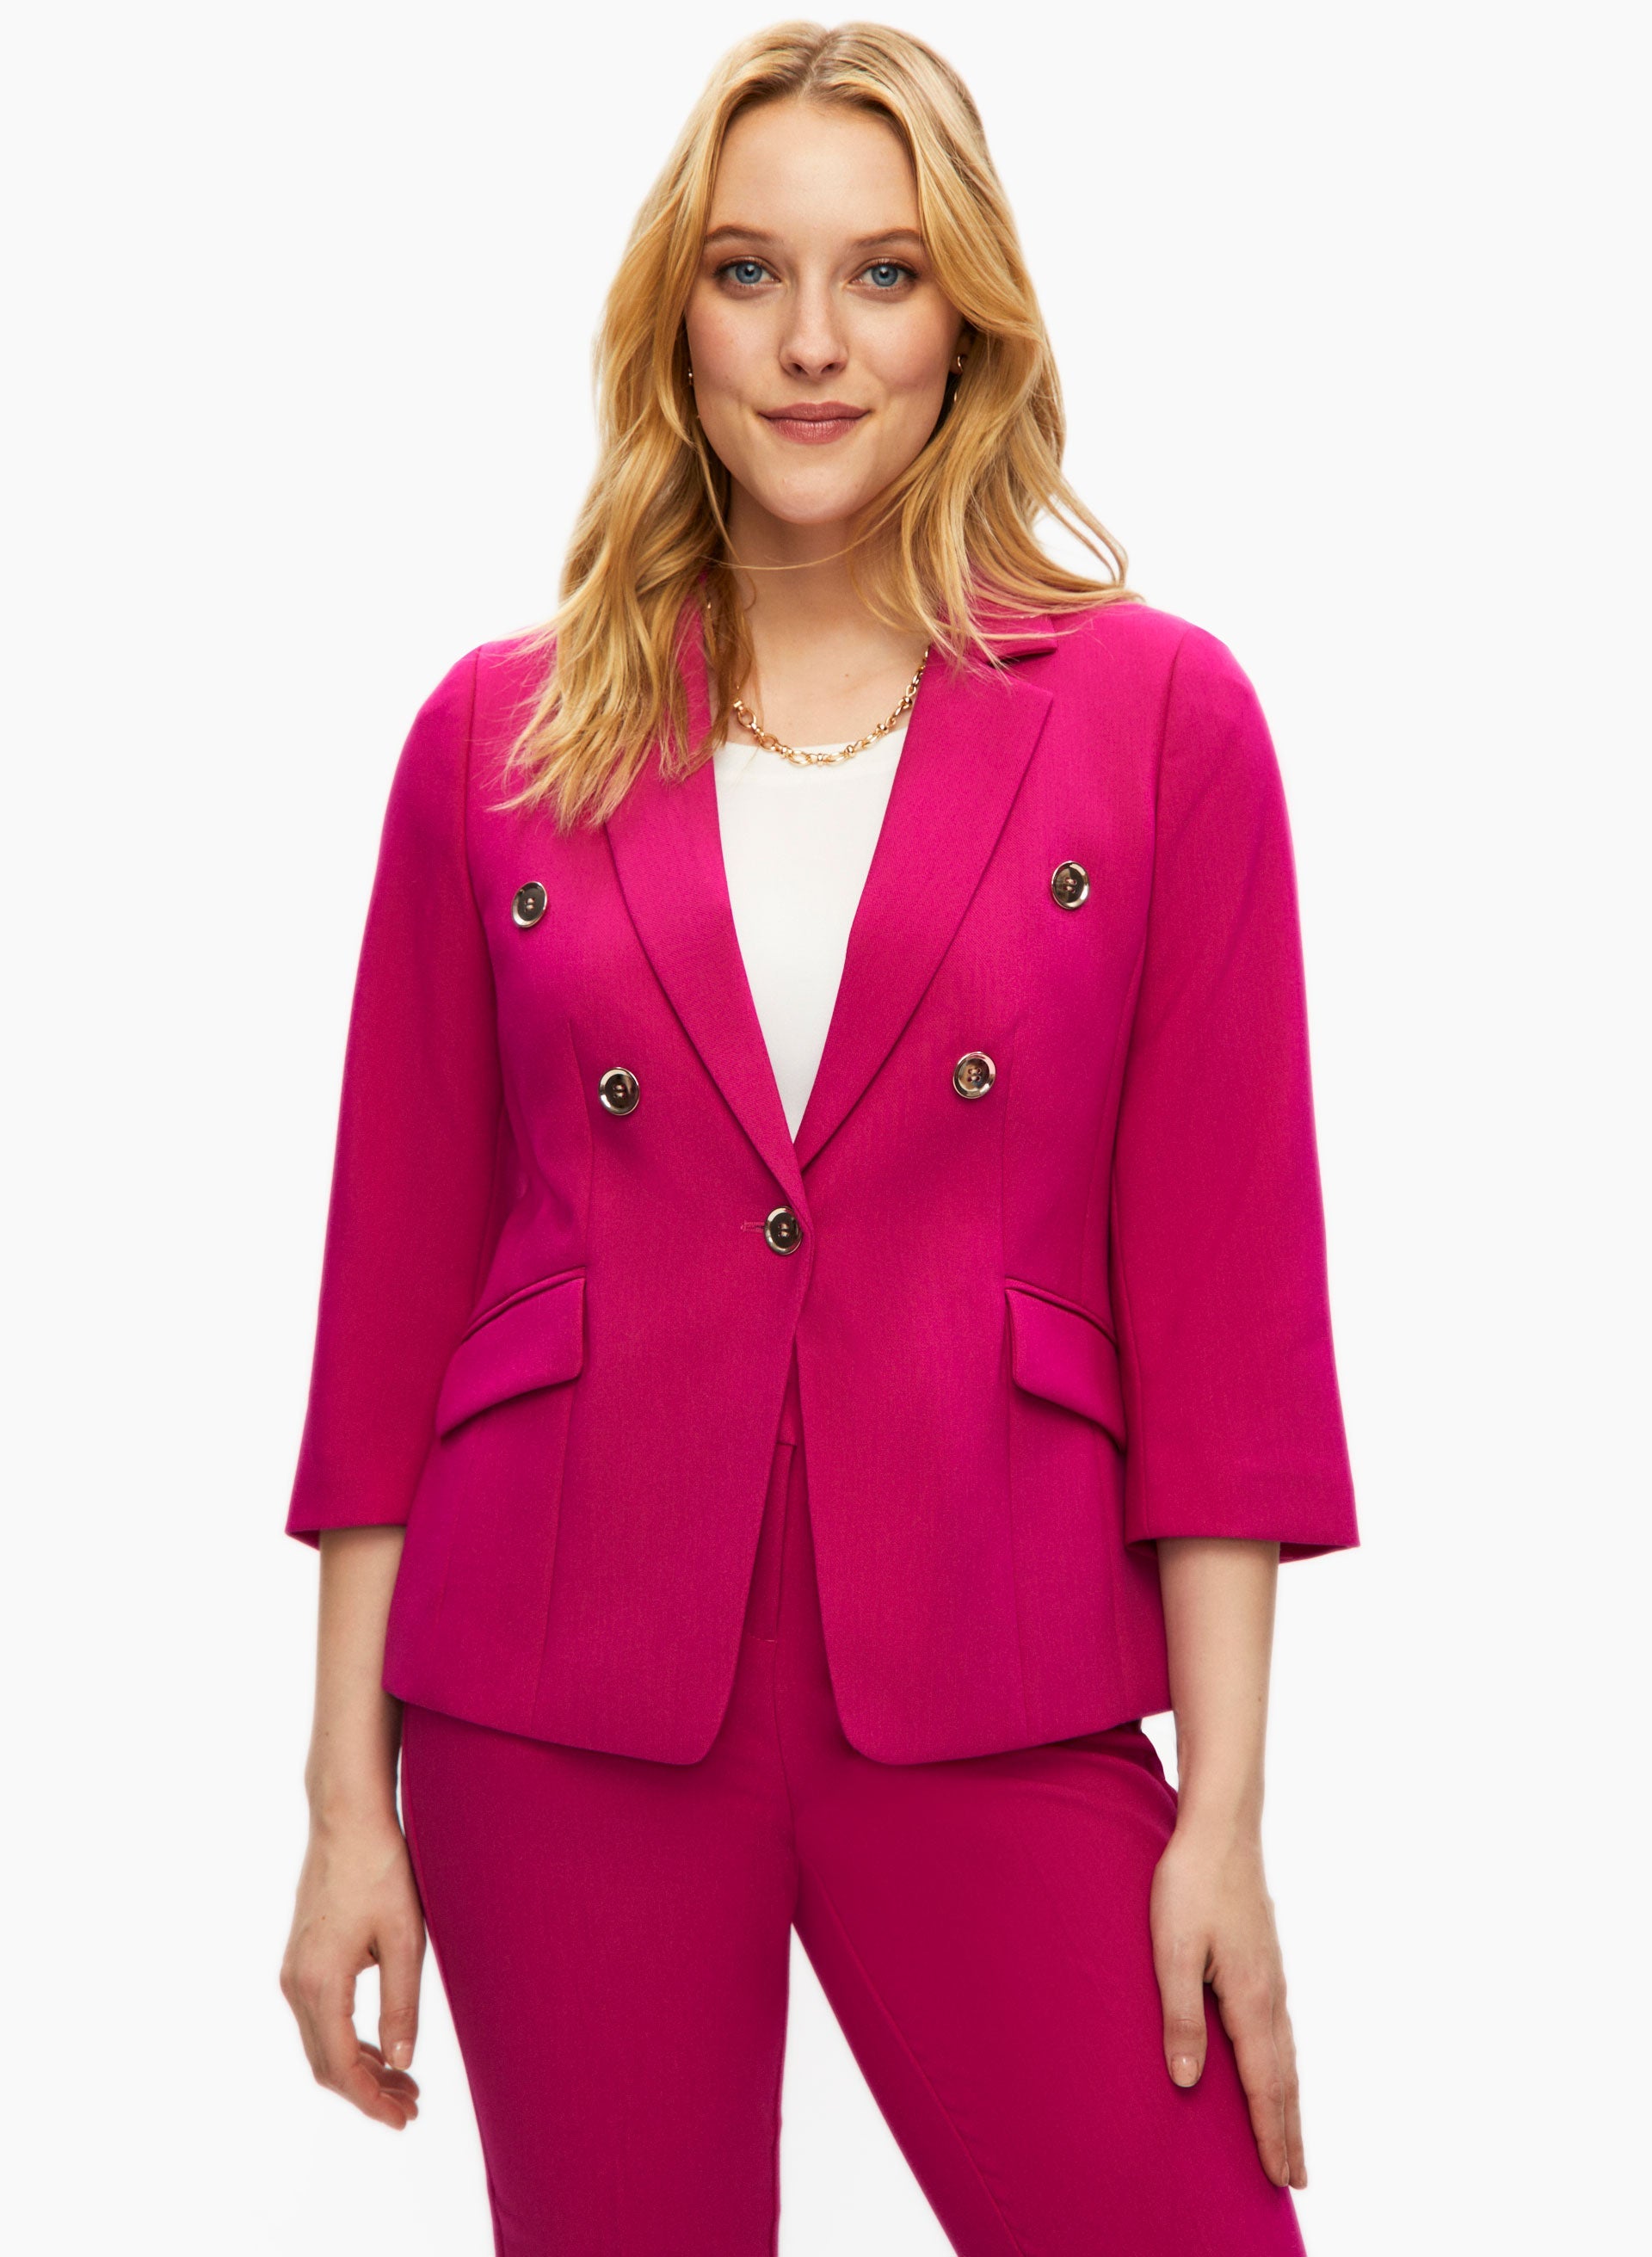 CenturyX Women's Blazer Suit 3/4 Sleeve Cardigan Jacket Suit